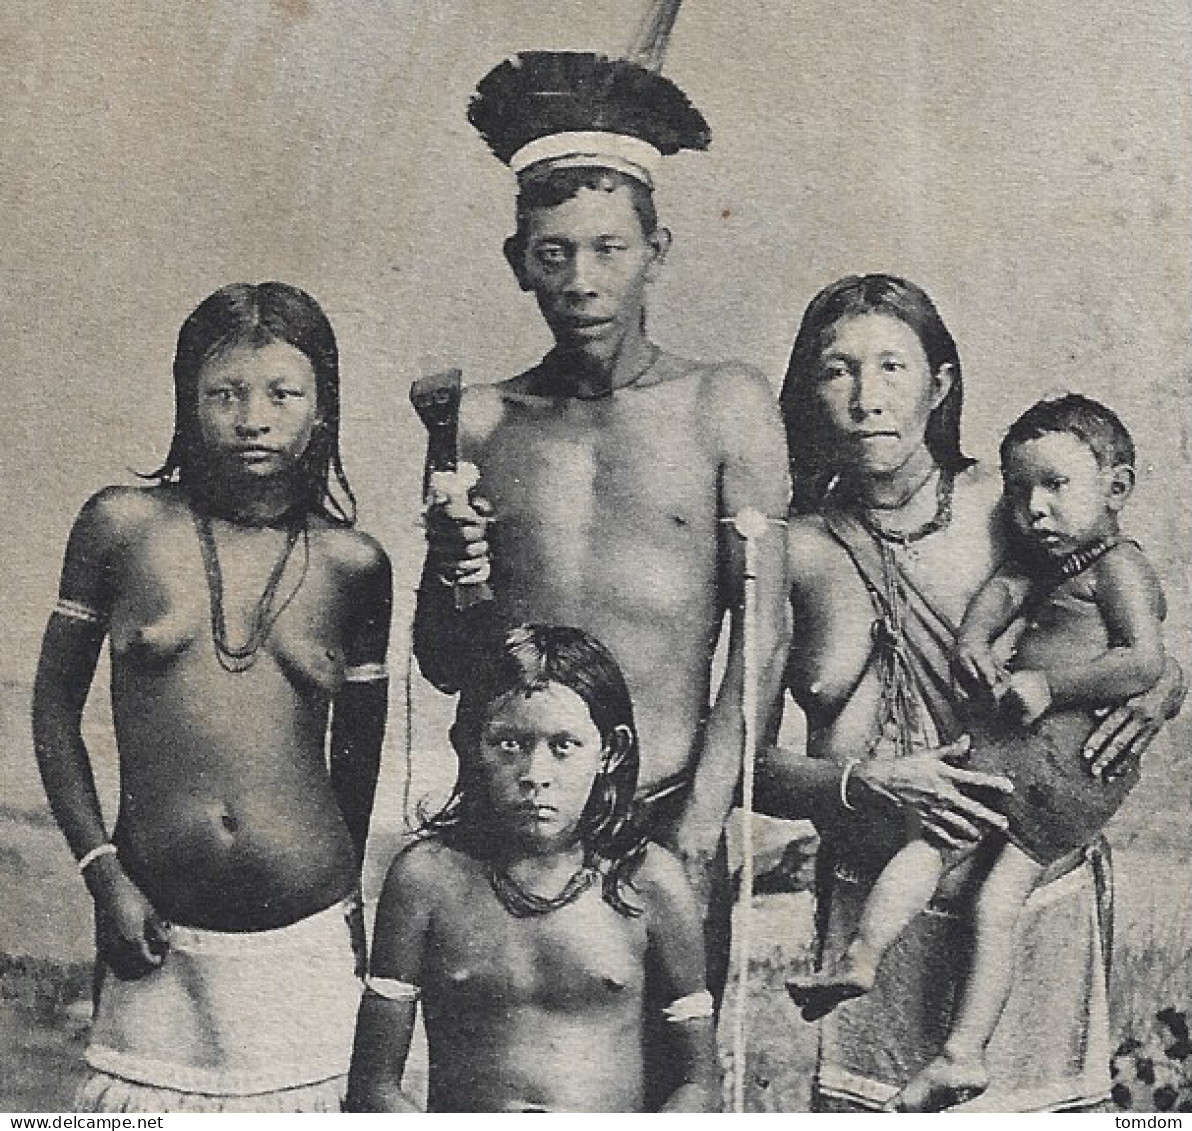 Guyane Britannique***Aboriginal Indians,British Guiana (Famille D'Indiens Aborigènes/Smith Bros & Co) - Guyana (voorheen Brits Guyana)